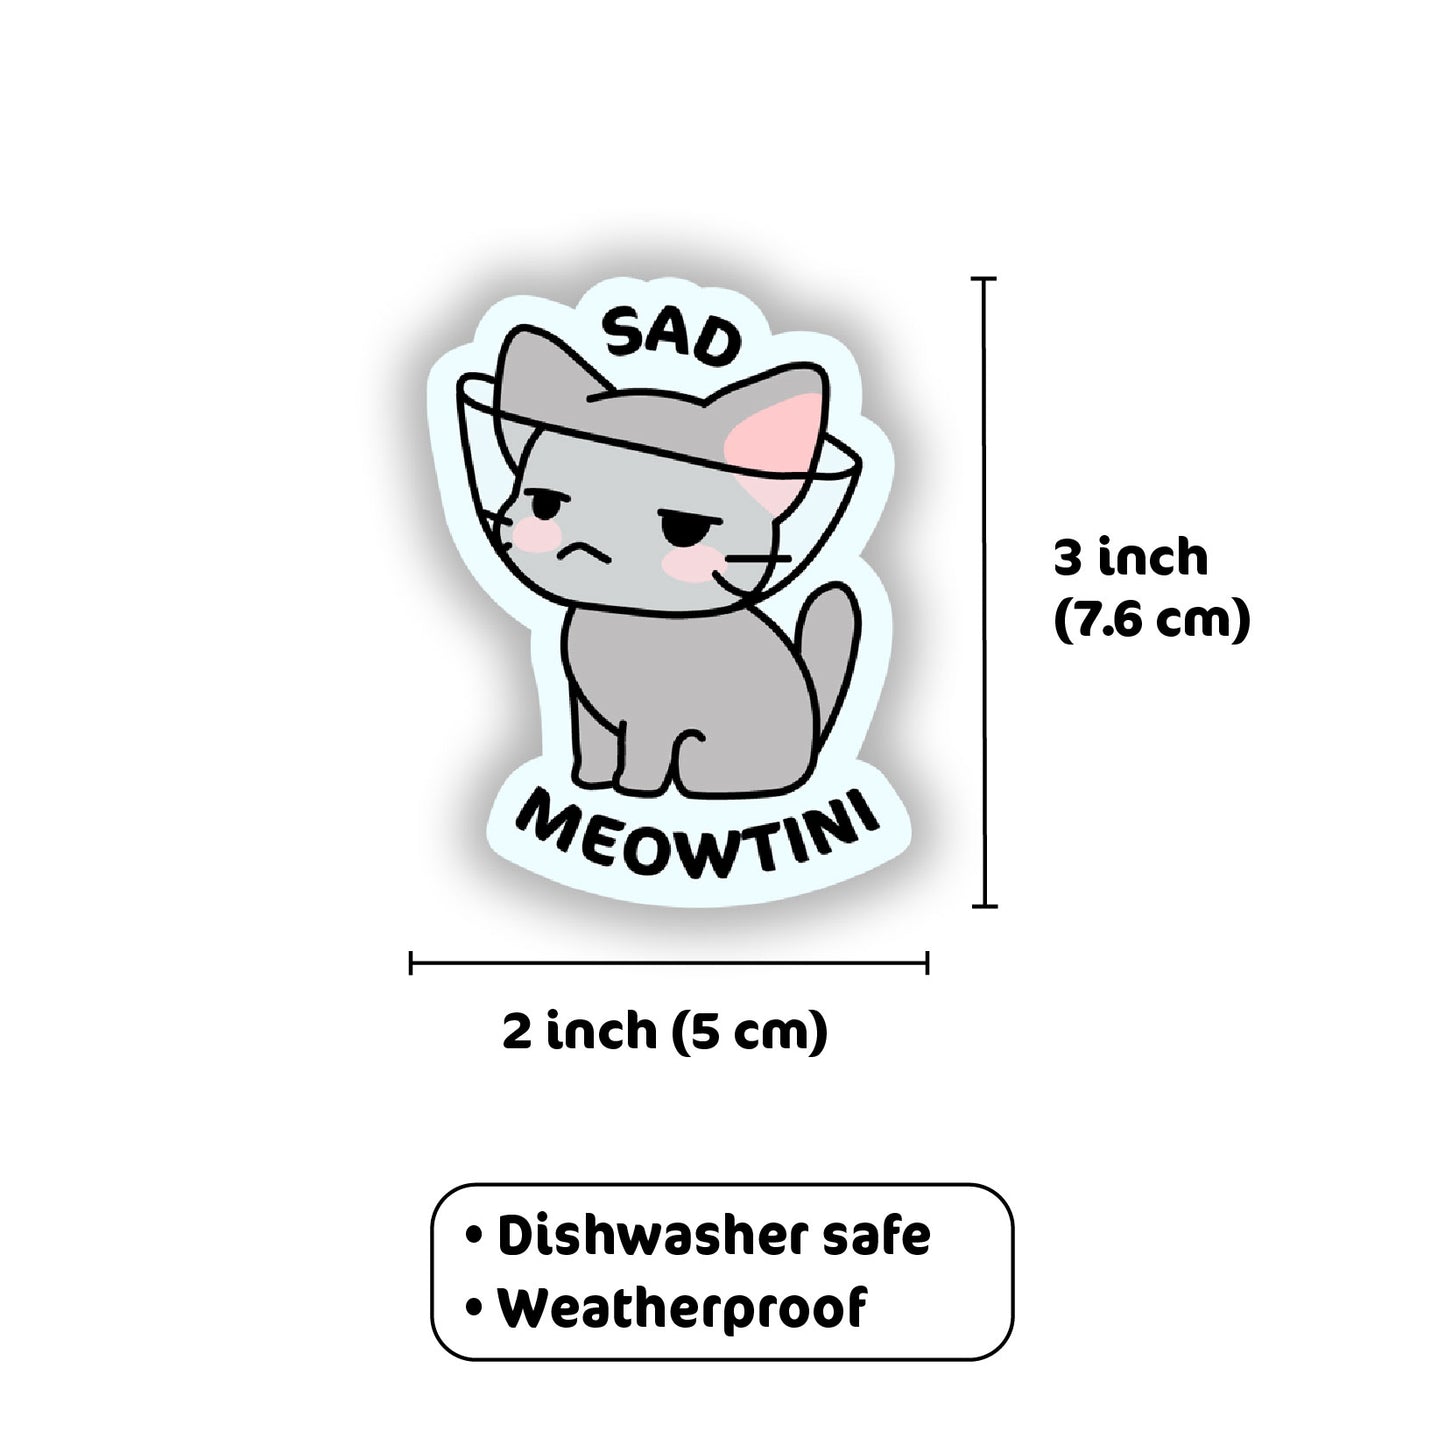 Sad Meowtini Vinyl Sticker